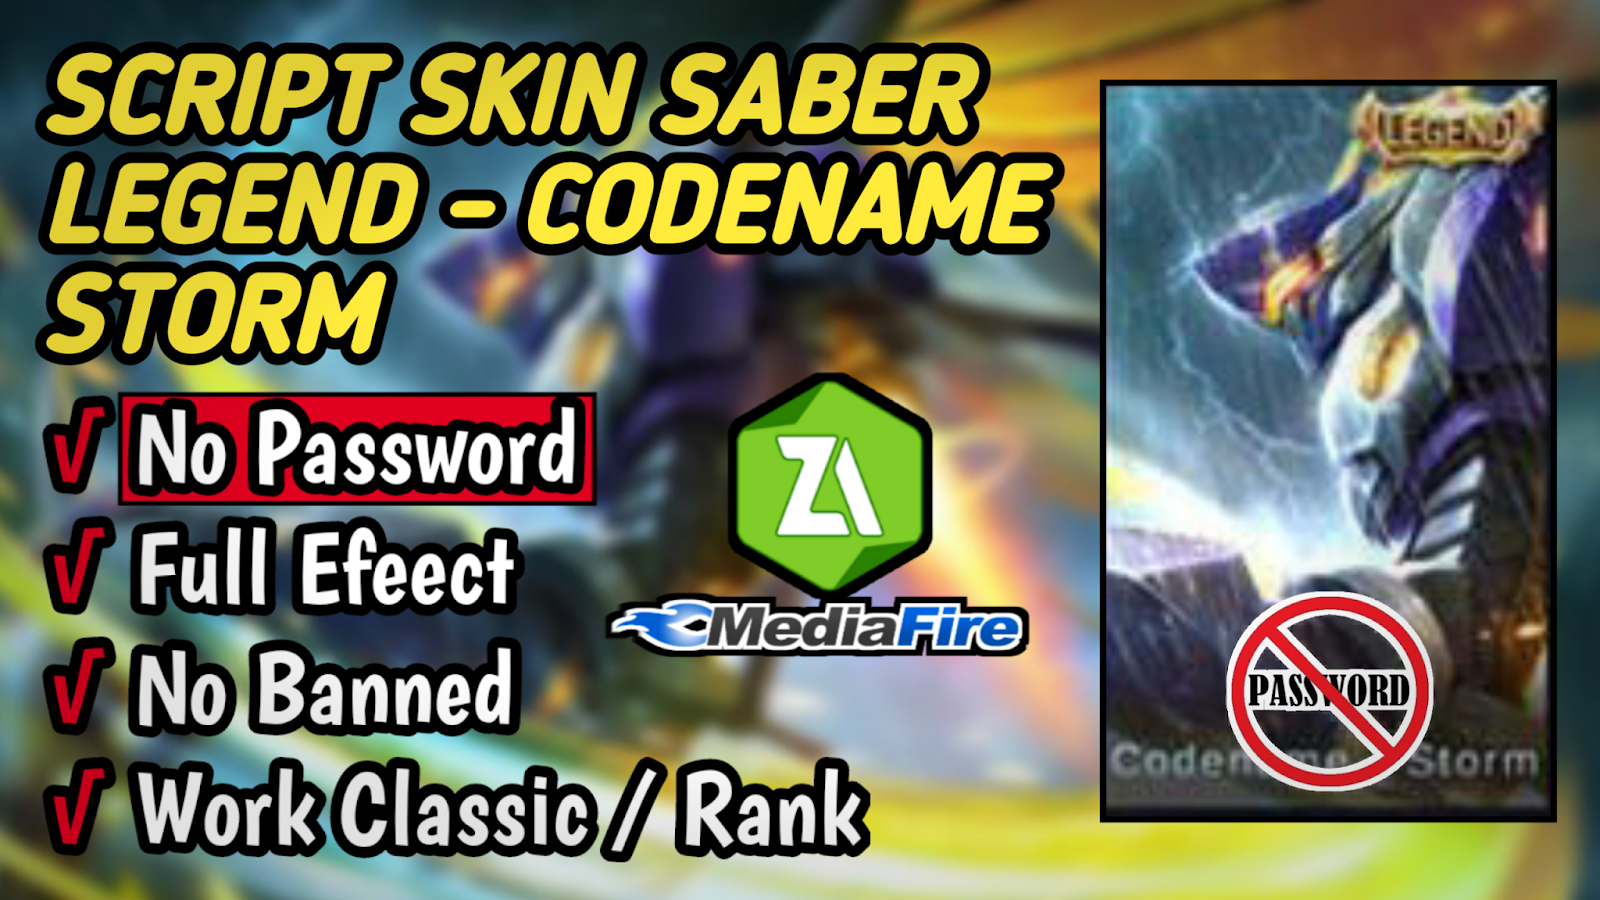 SCRIPT SKIN Saber Legend - Codename Strom Full Effect ...